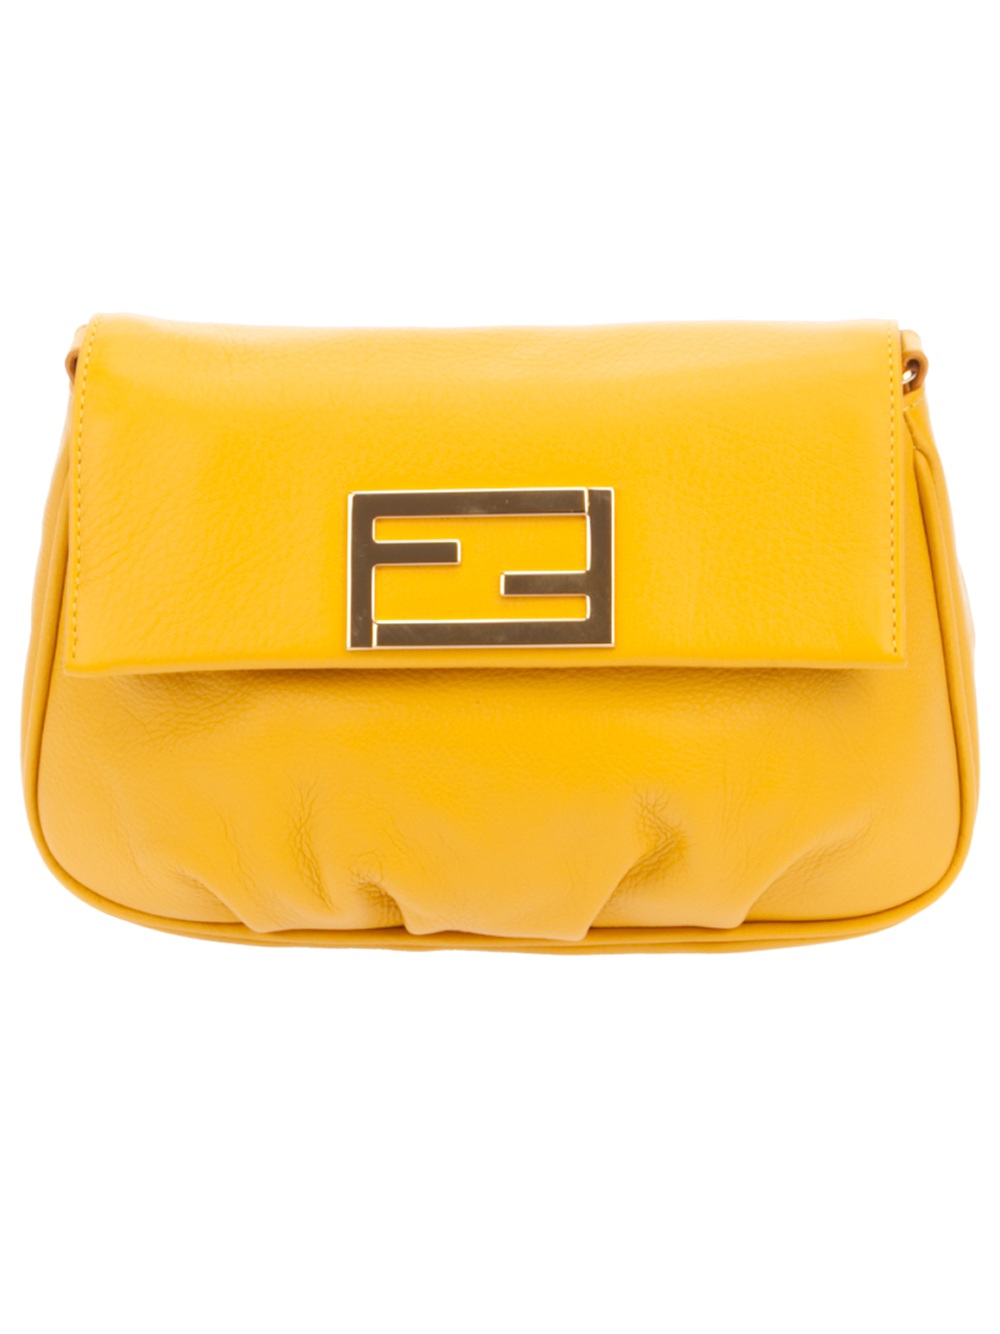 Fendi Logo Buckle Shoulder Bag in Yellow | Lyst